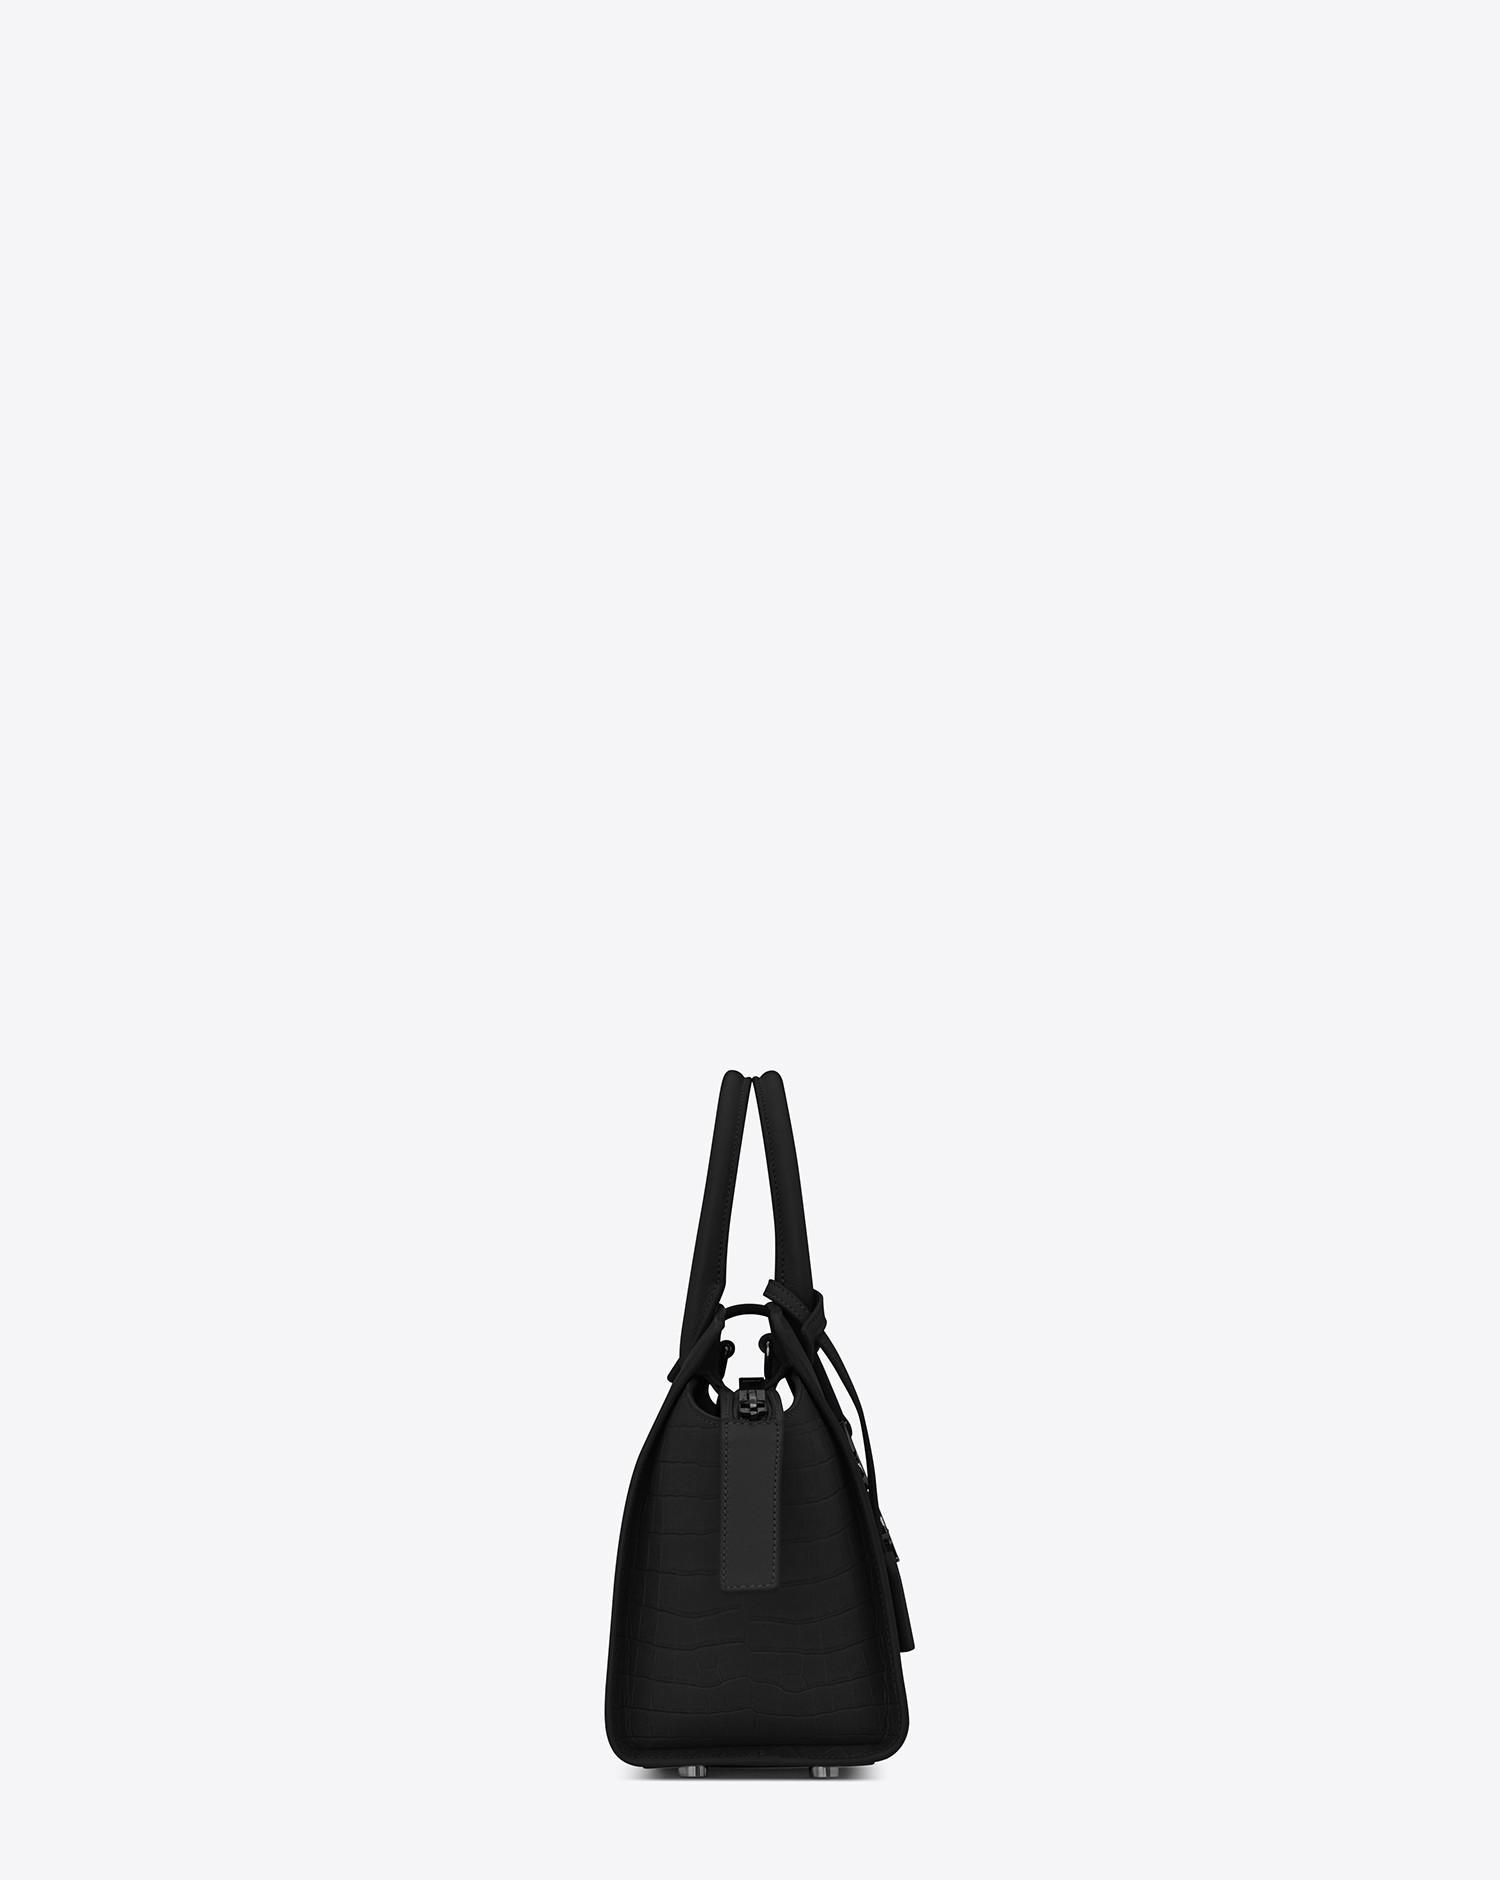 SAINT LAURENT Baby Cabas Monogramme Bag in Black Leather [ReSale]